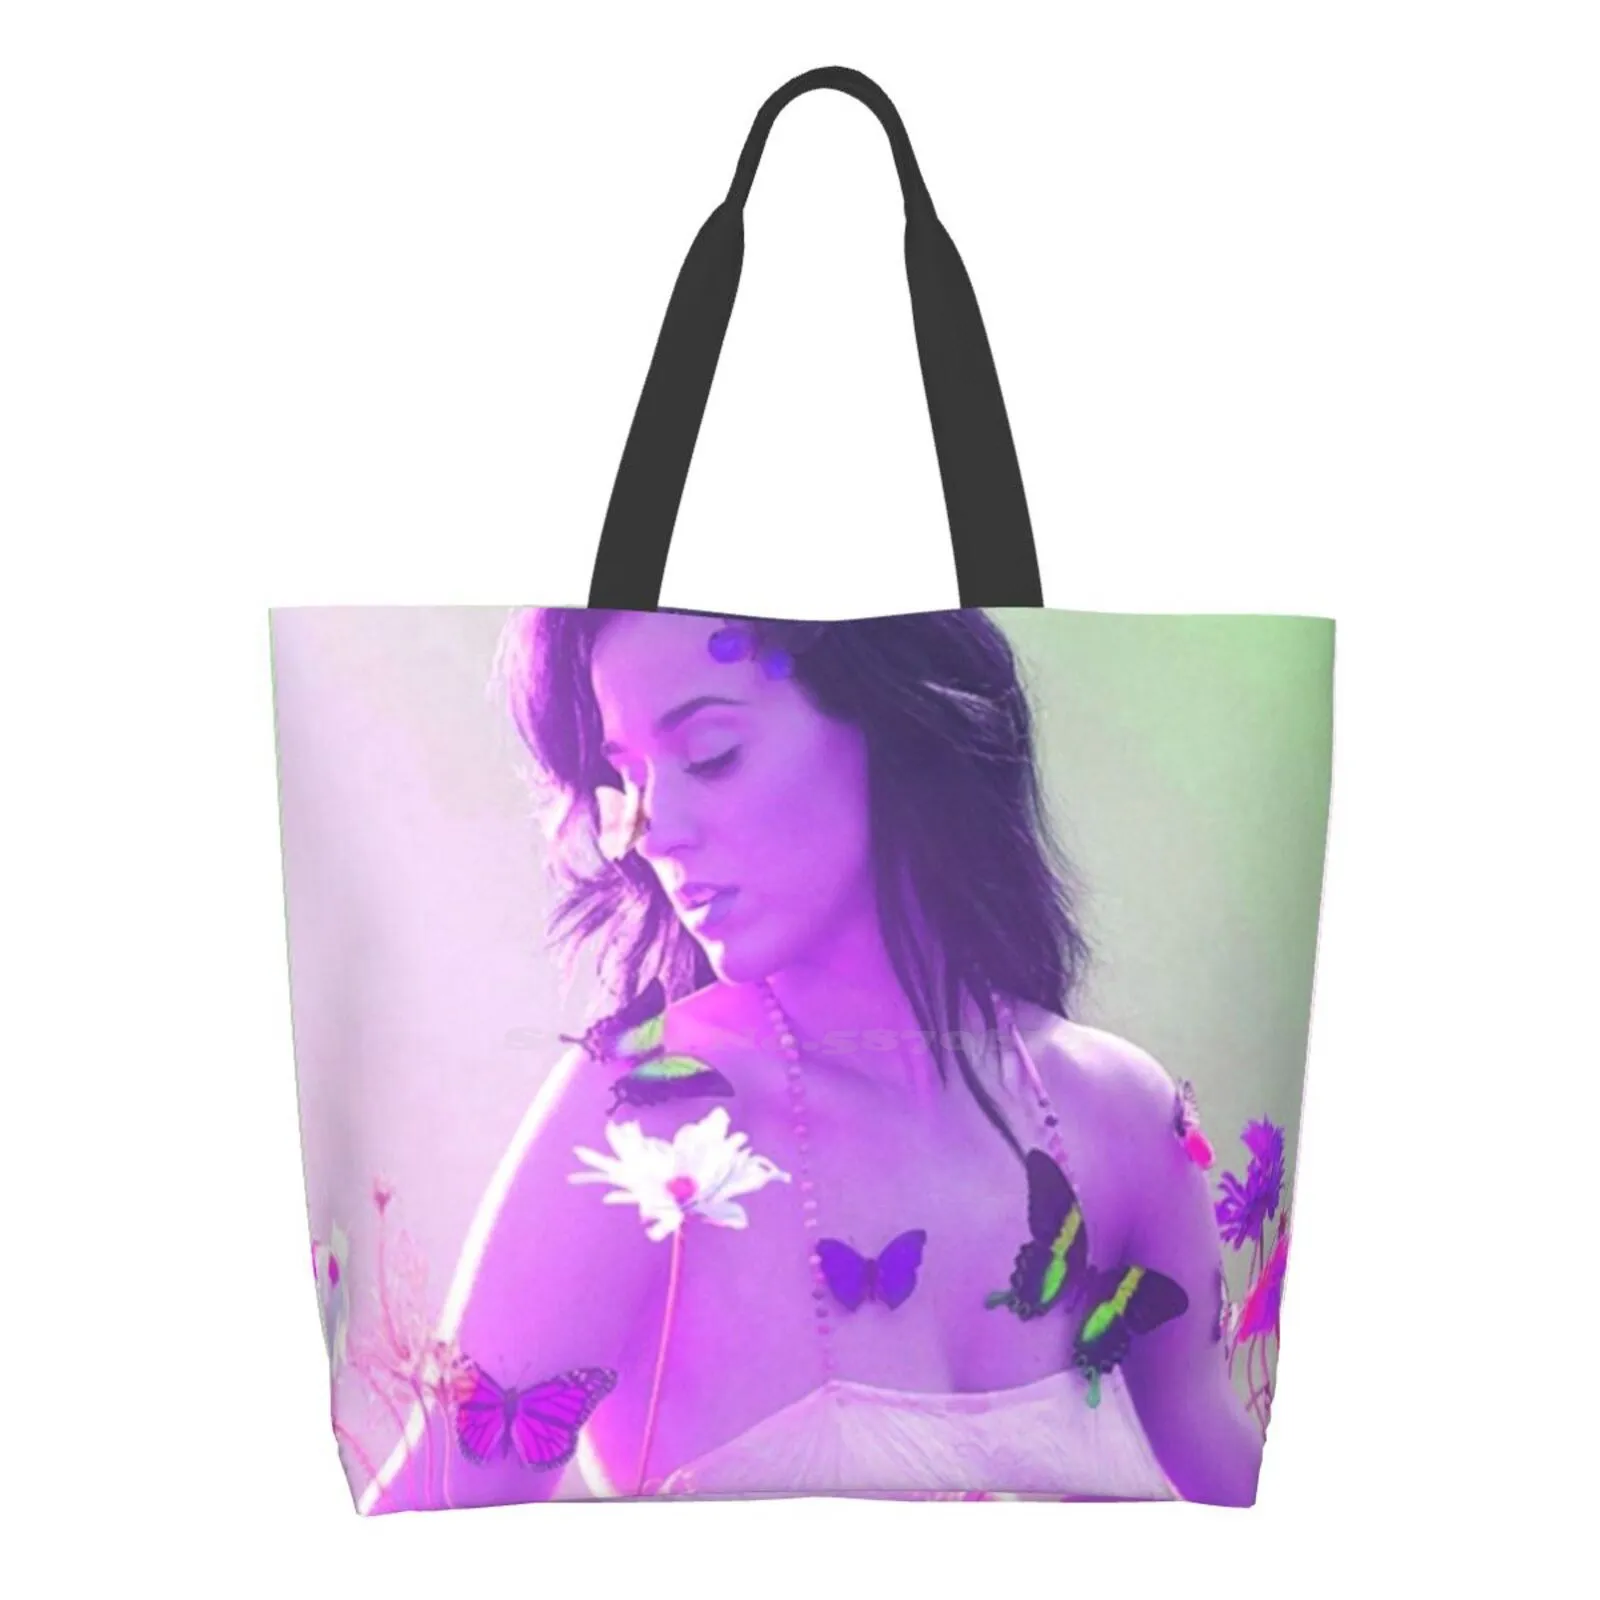 

Katy Color Full Designer Handbags Shopping Tote Perry Queen Elizabeth Parrys 2020 Wap Smile Boys Katycat Daisies Witness Prism